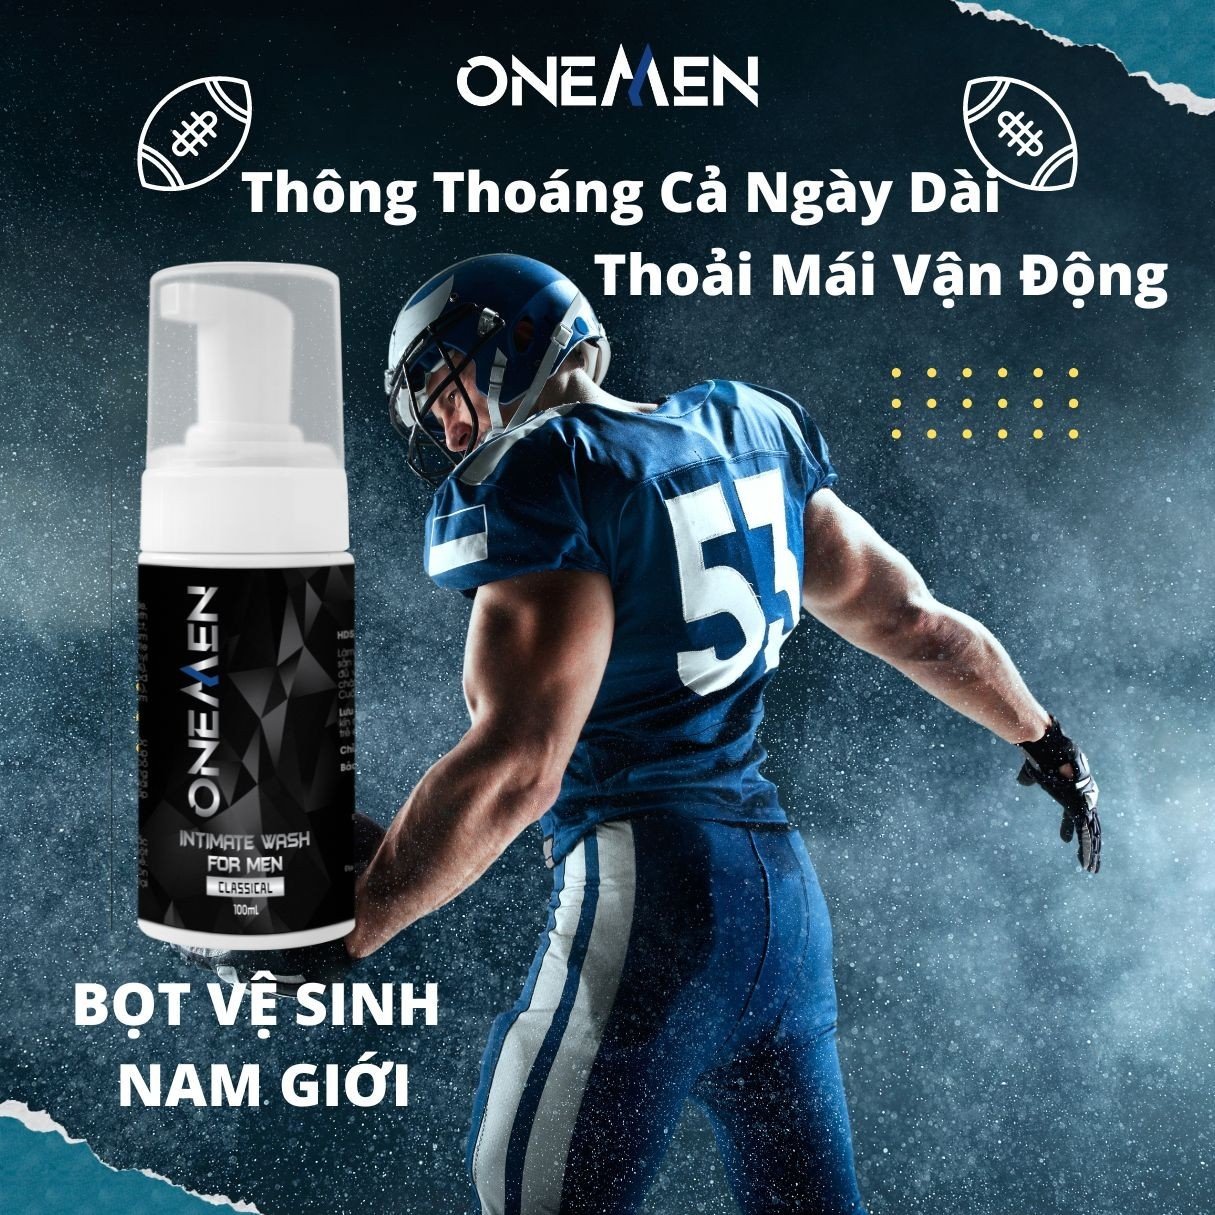 Combo Tiết Kiệm: 2 Bọt Vệ Sinh Nam + Sữa Tắm Gội OneMen 3 IN 1  Aromatic Shower Gel